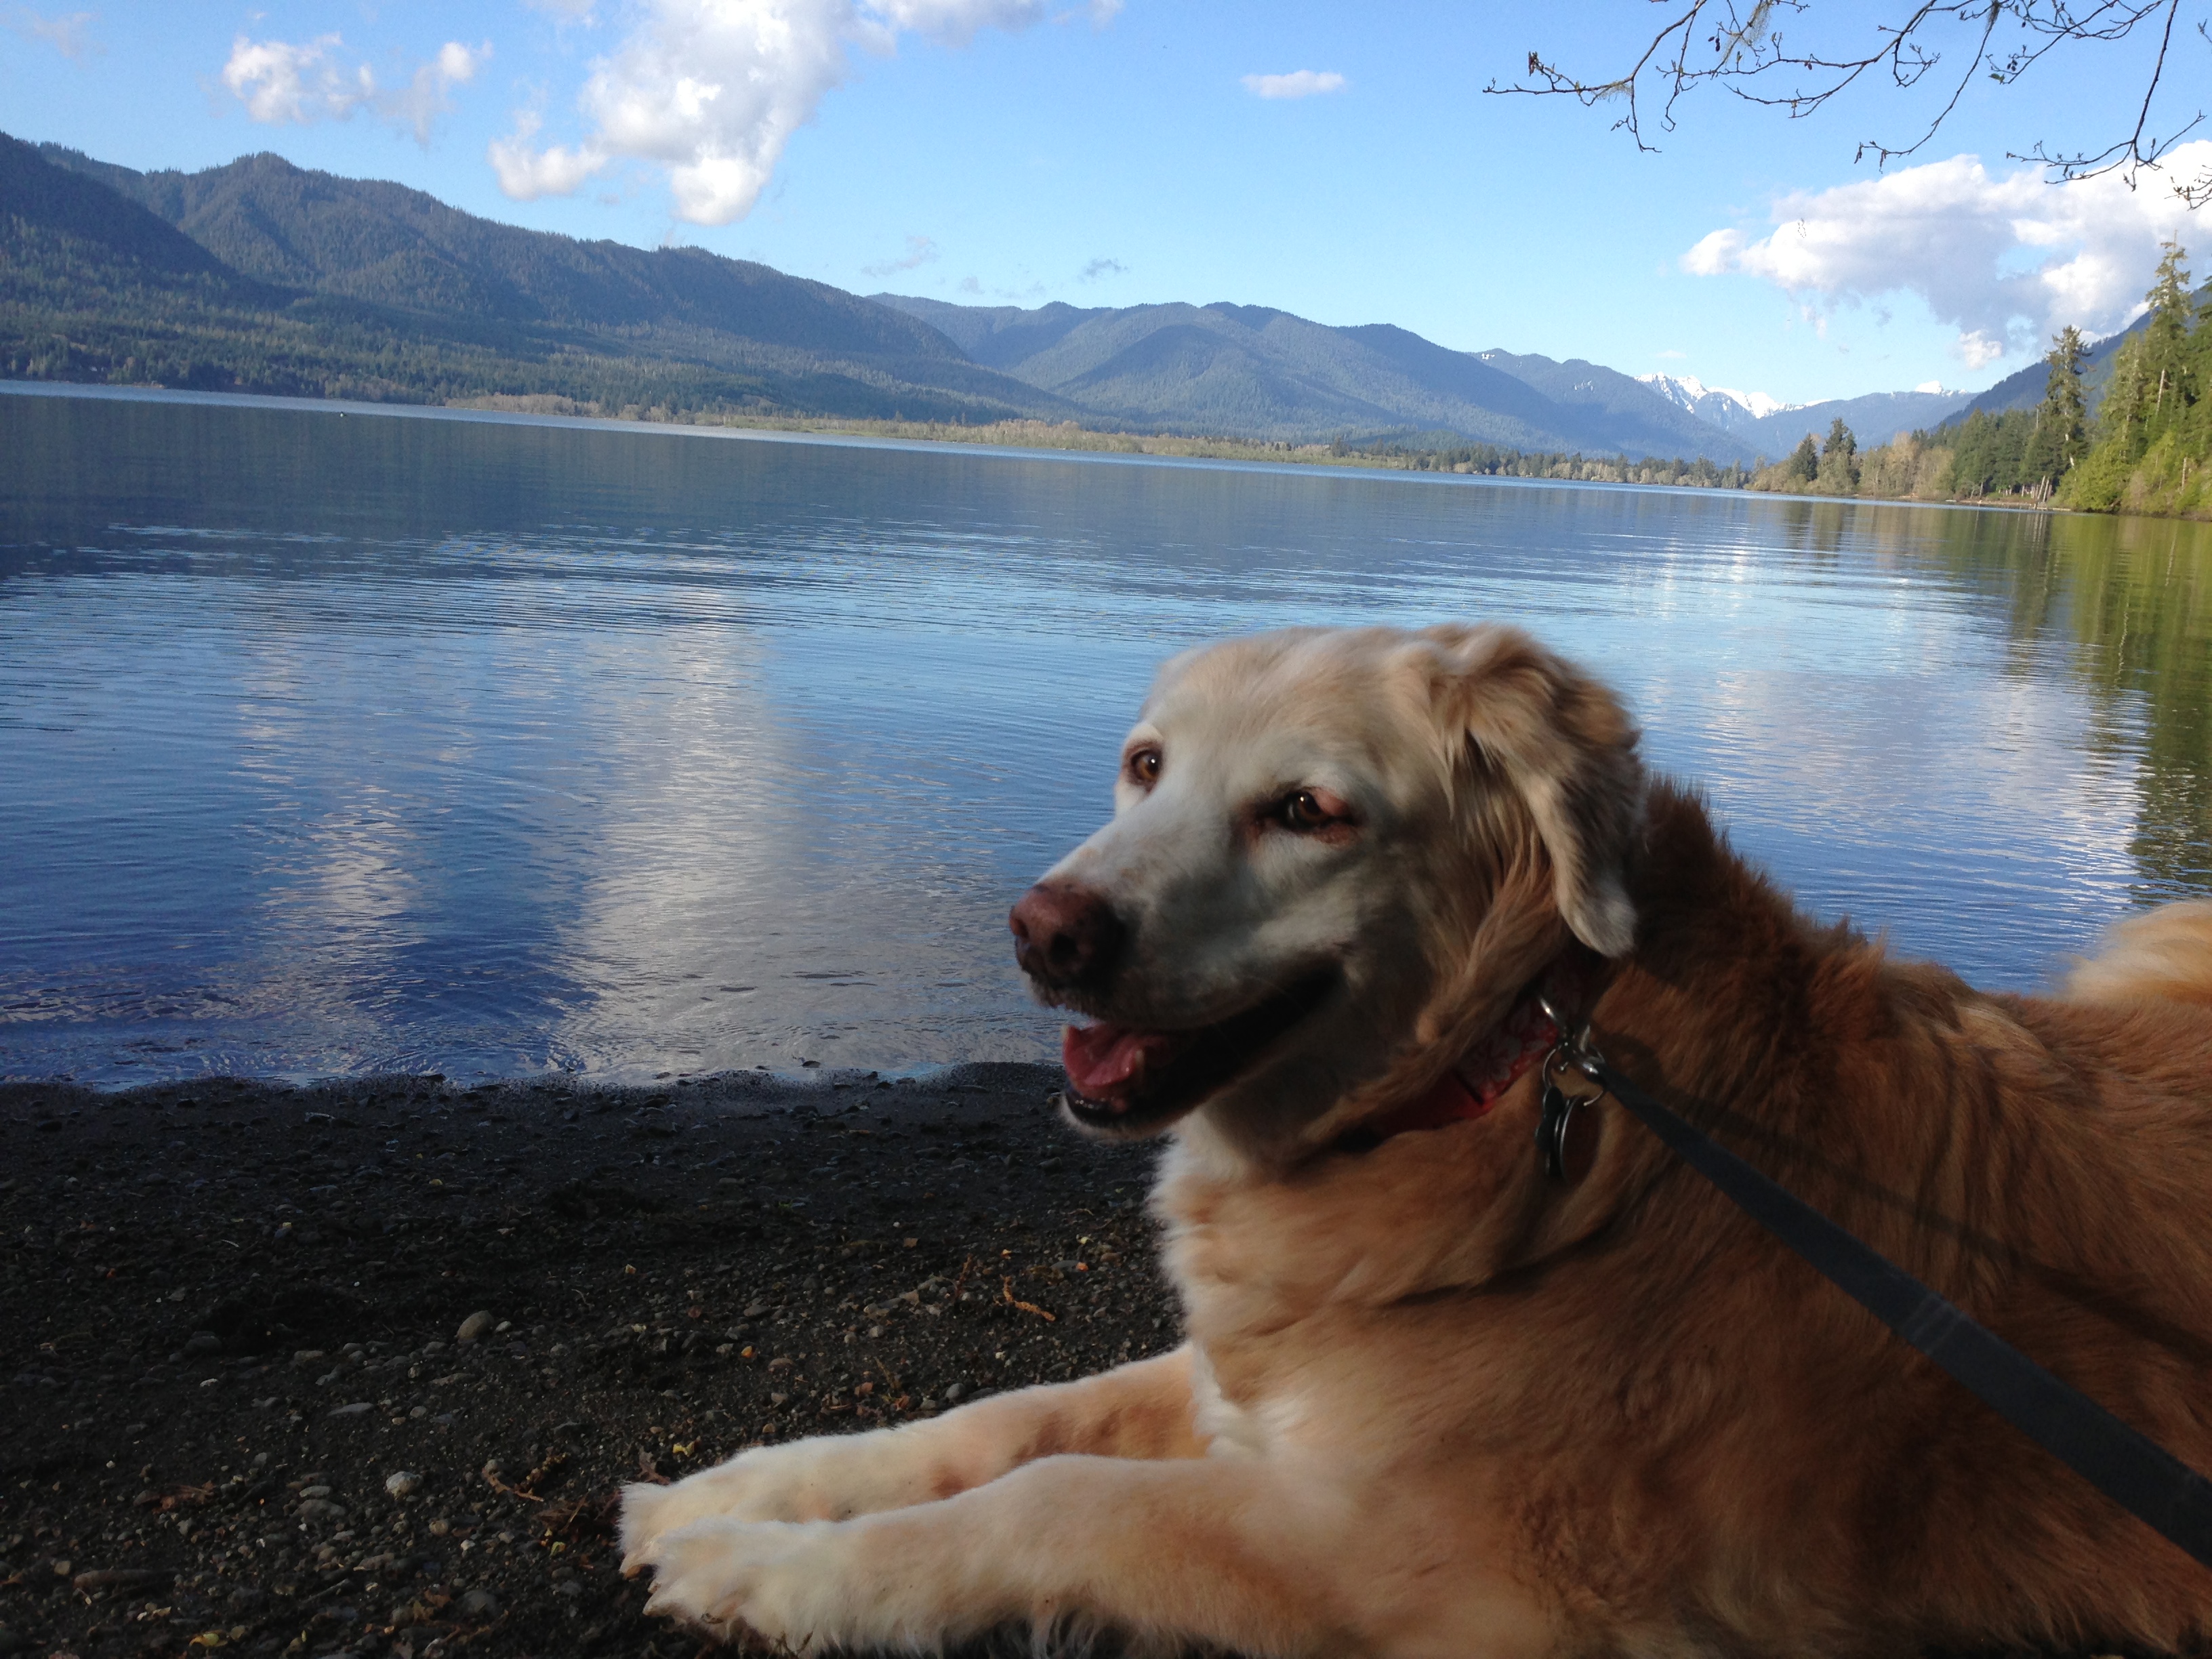 Dinah relaxing at Lake Quinalt